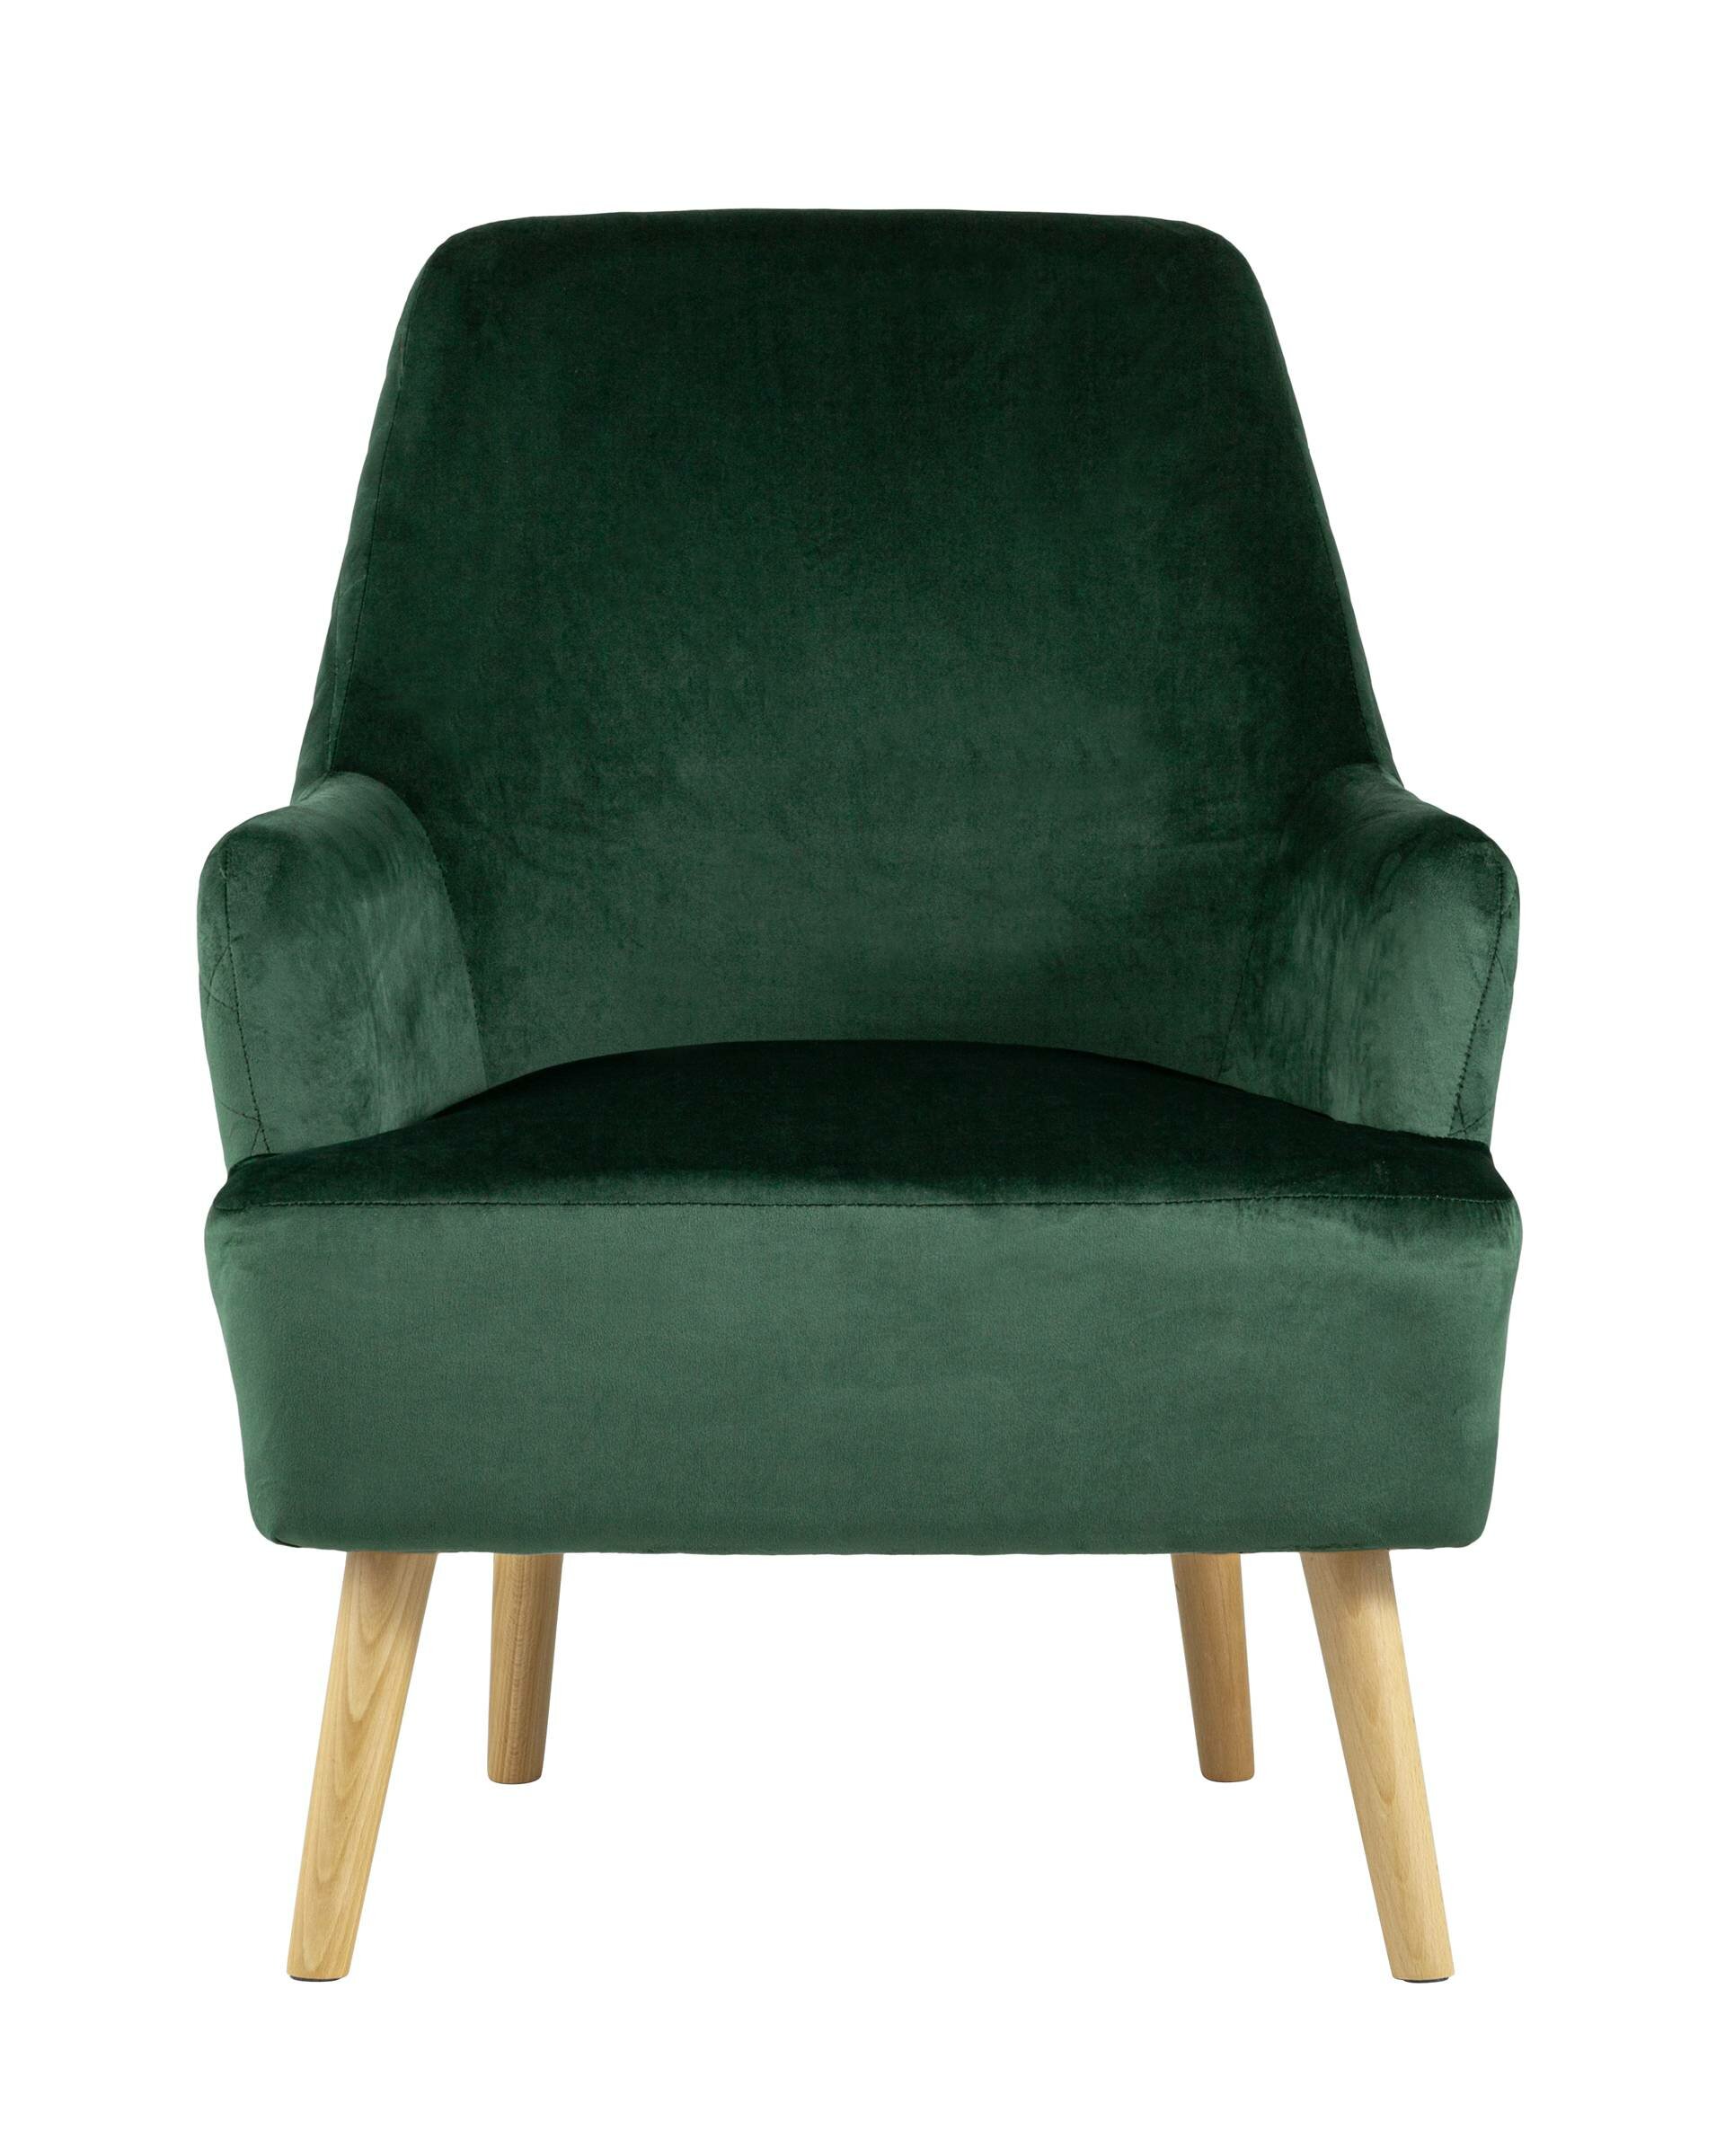 Кресло STOOL GROUP Хантер зеленый обивка велюр ножки массив дерева